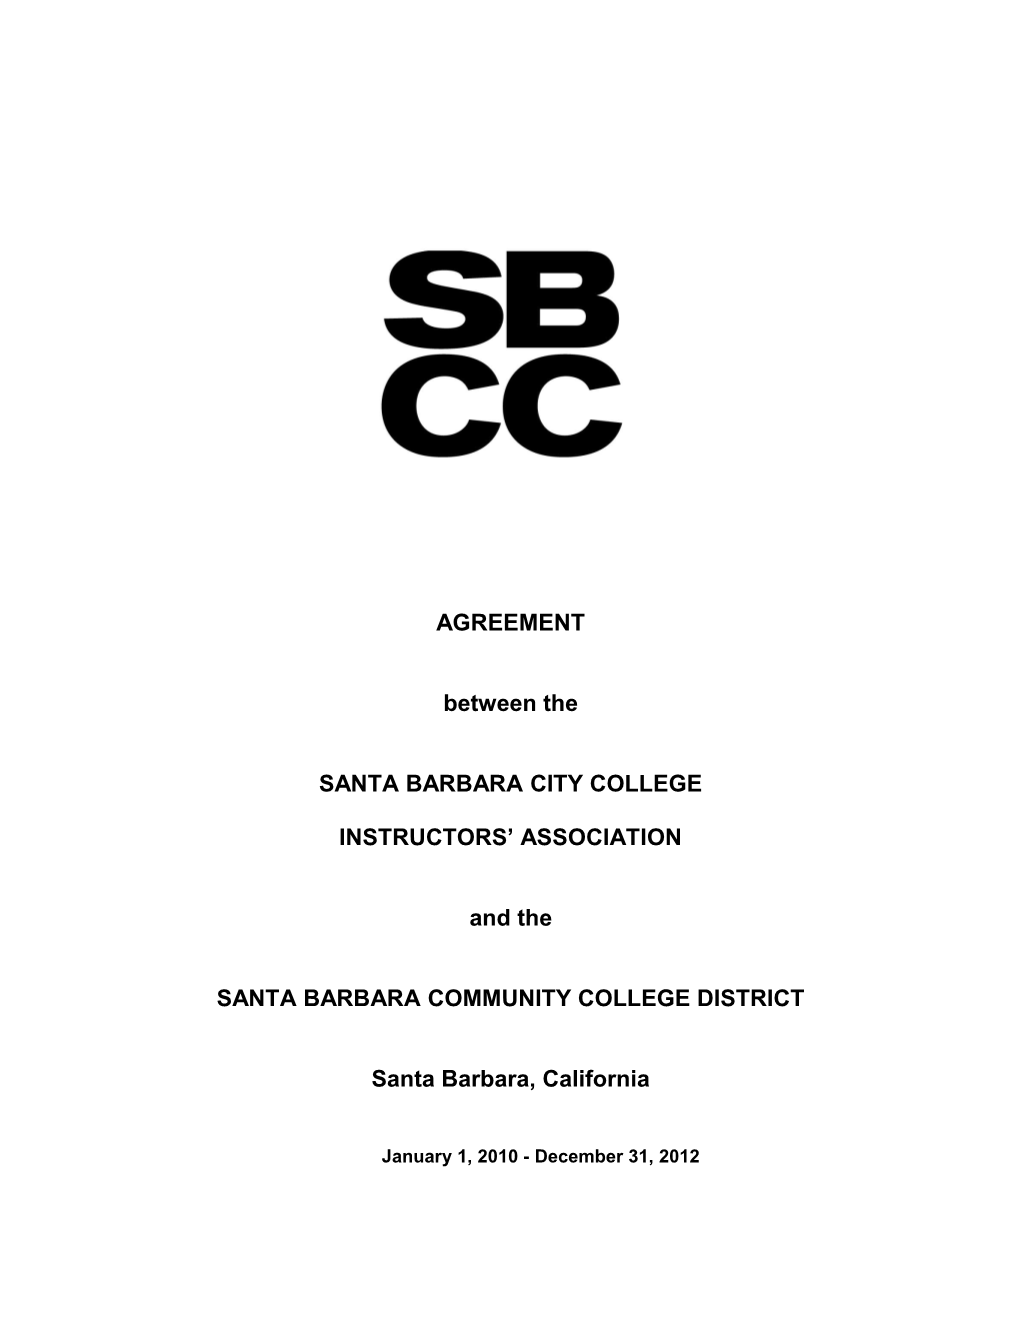 Santa Barbara City College s3